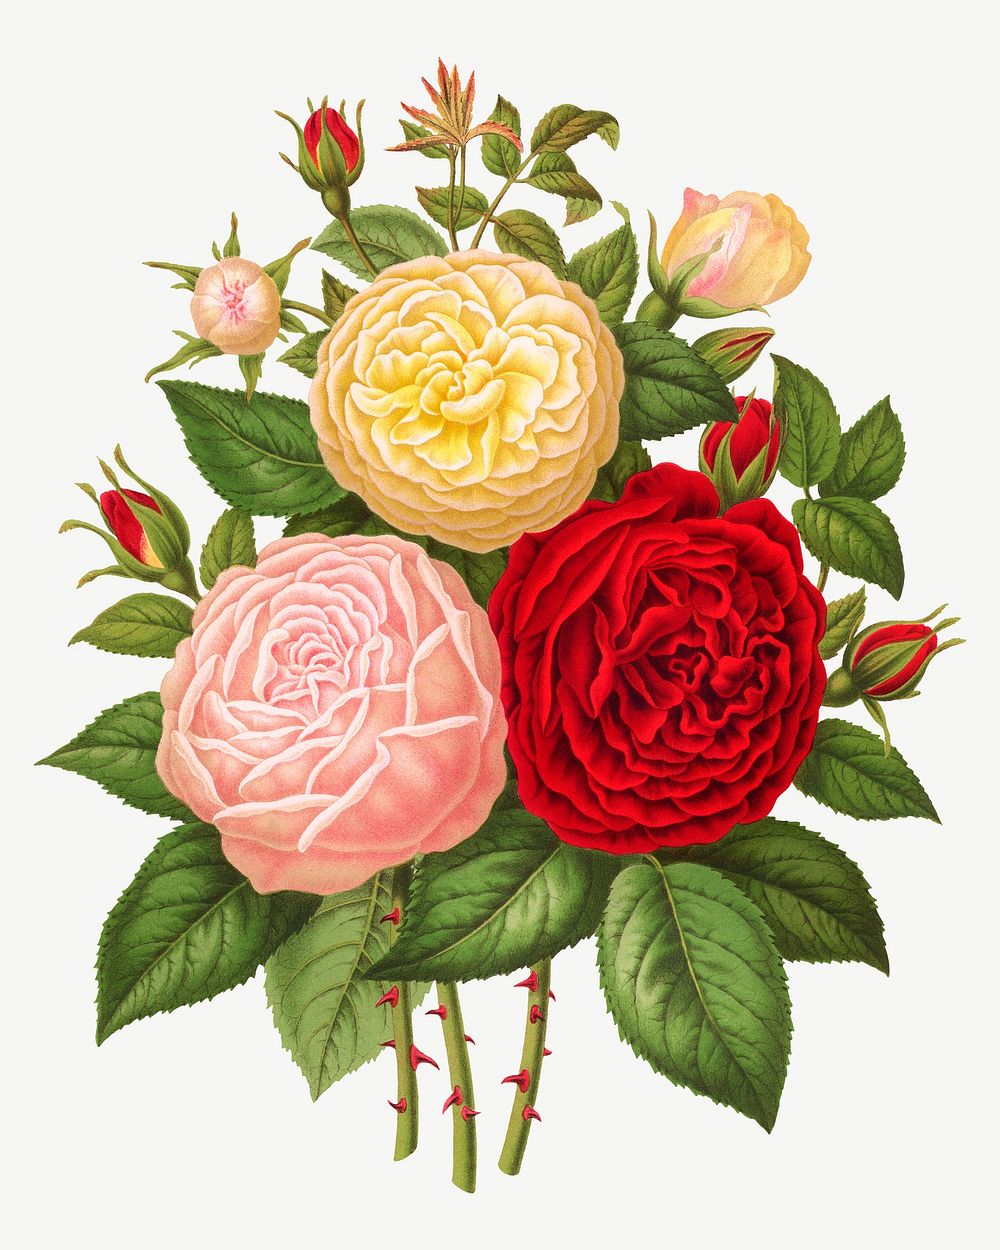 Vintage roses illustration, collage element psd. Remixed from our own original 1879 edition of Nederlandsche Flora en…